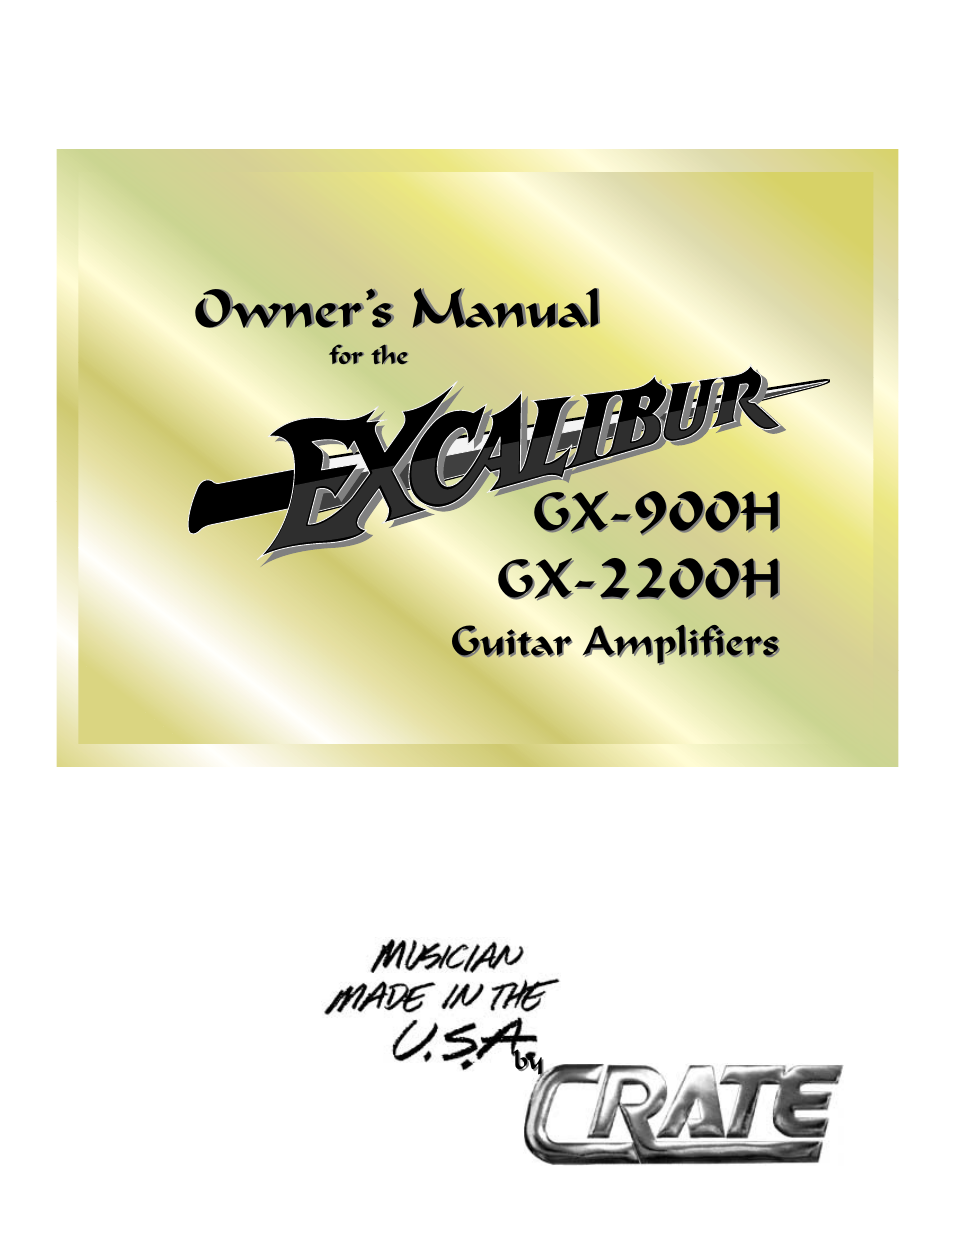 EXCALIBUR GX-900H